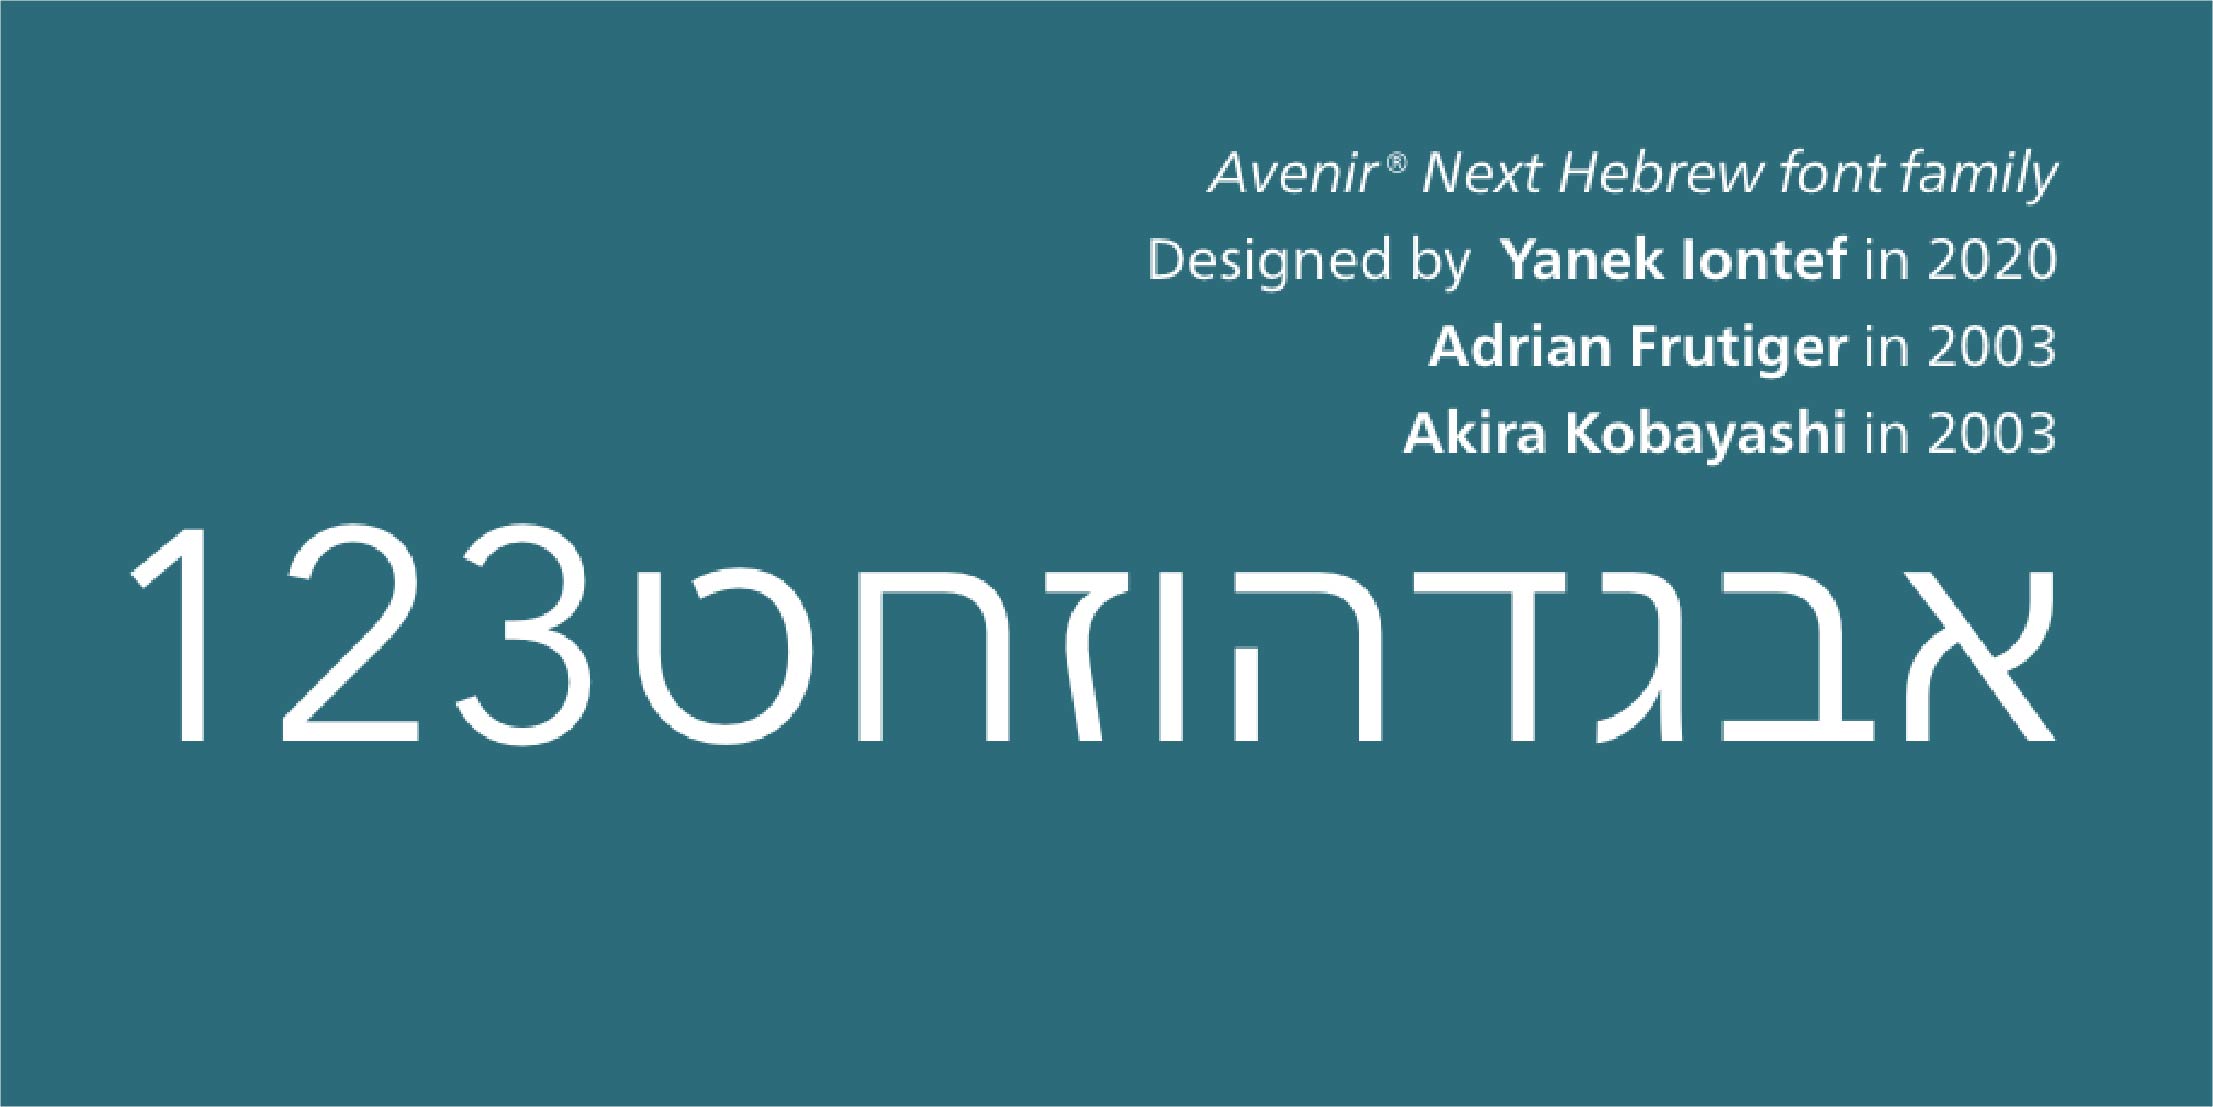 Avenir® Next Hebrew